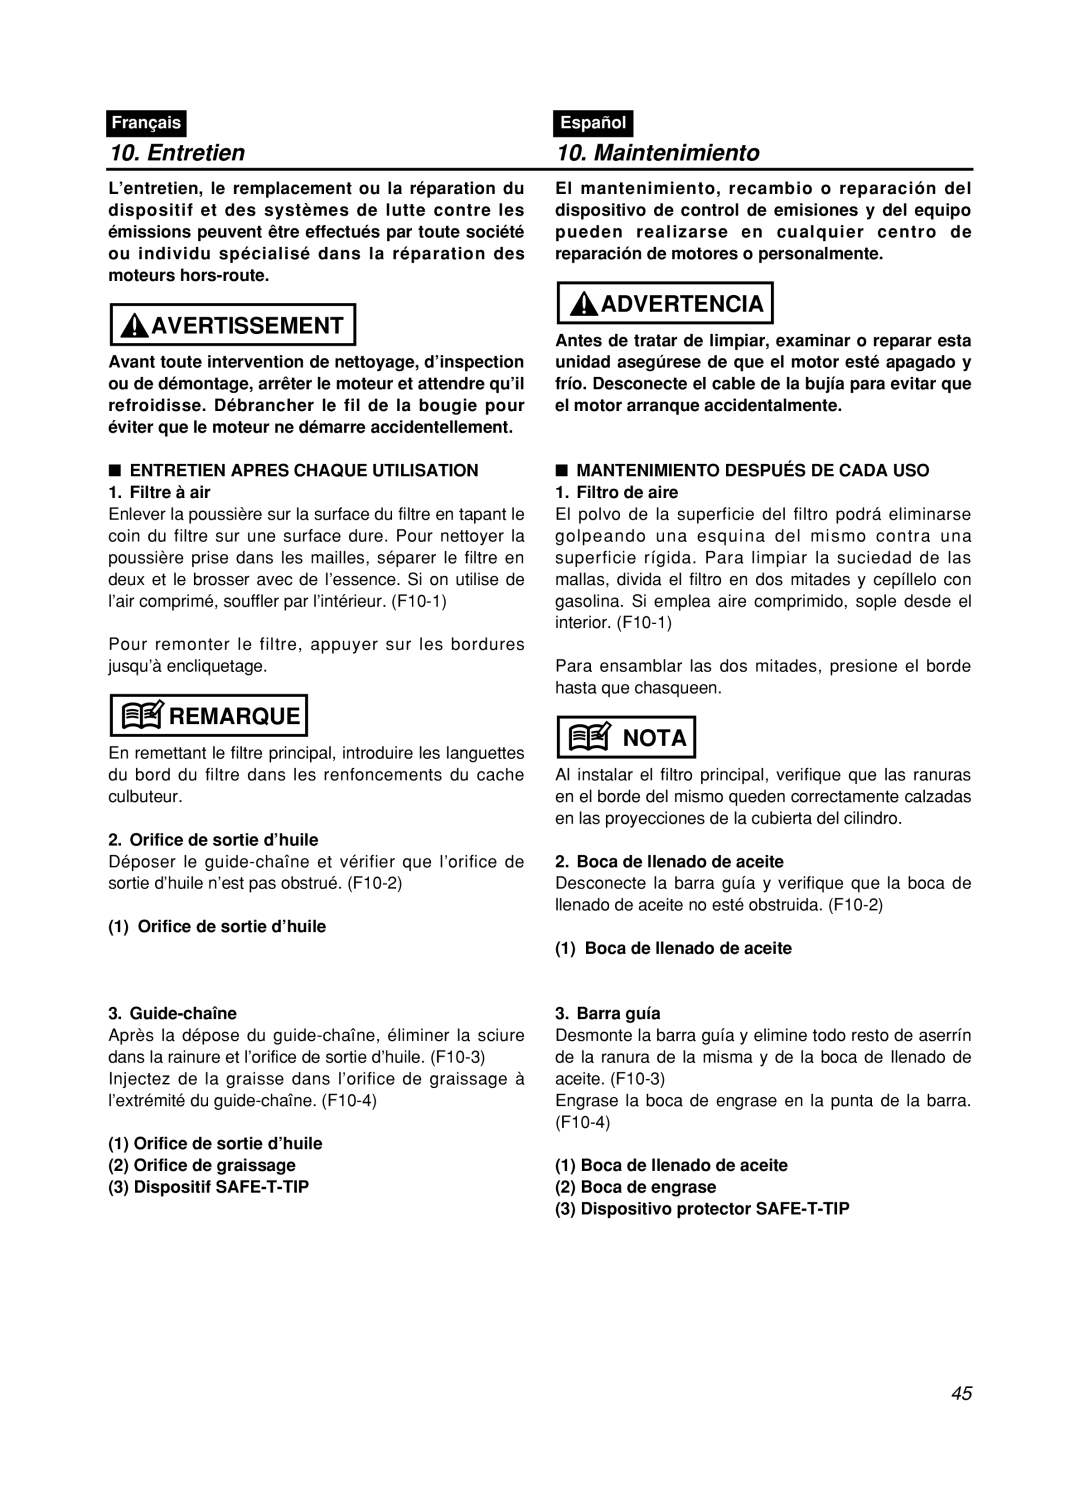 Zenoah GZ400 manual Entretien, Maintenimiento, Avertissement, Advertencia, Remarque, Nota, Français, Español 